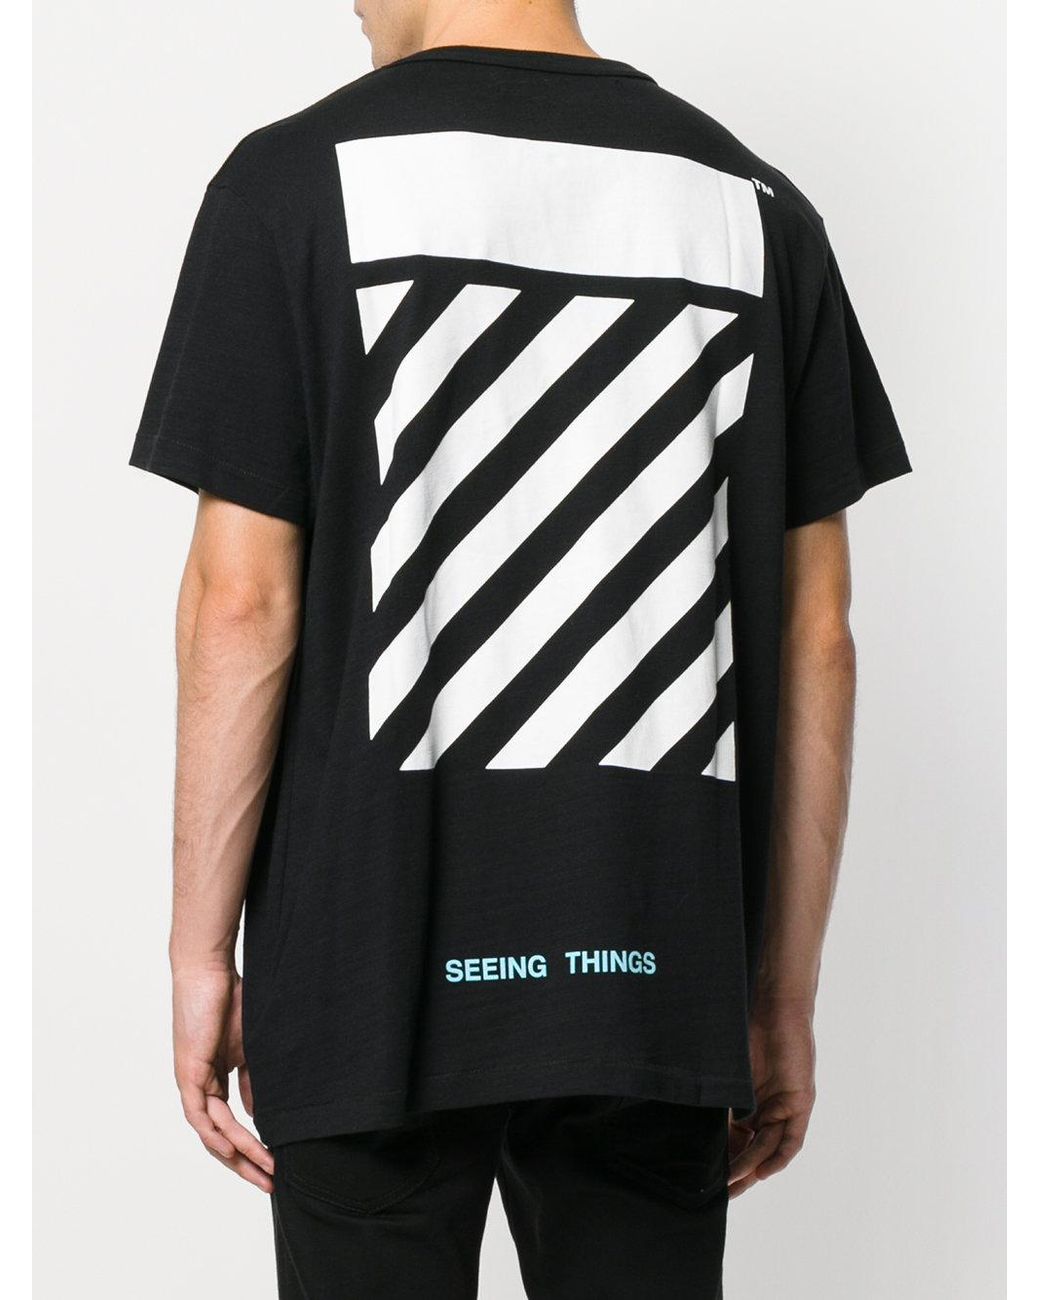 jeg behøver reservedele fordel Off-White c/o Virgil Abloh Seeing Things T-shirt in Black for Men | Lyst